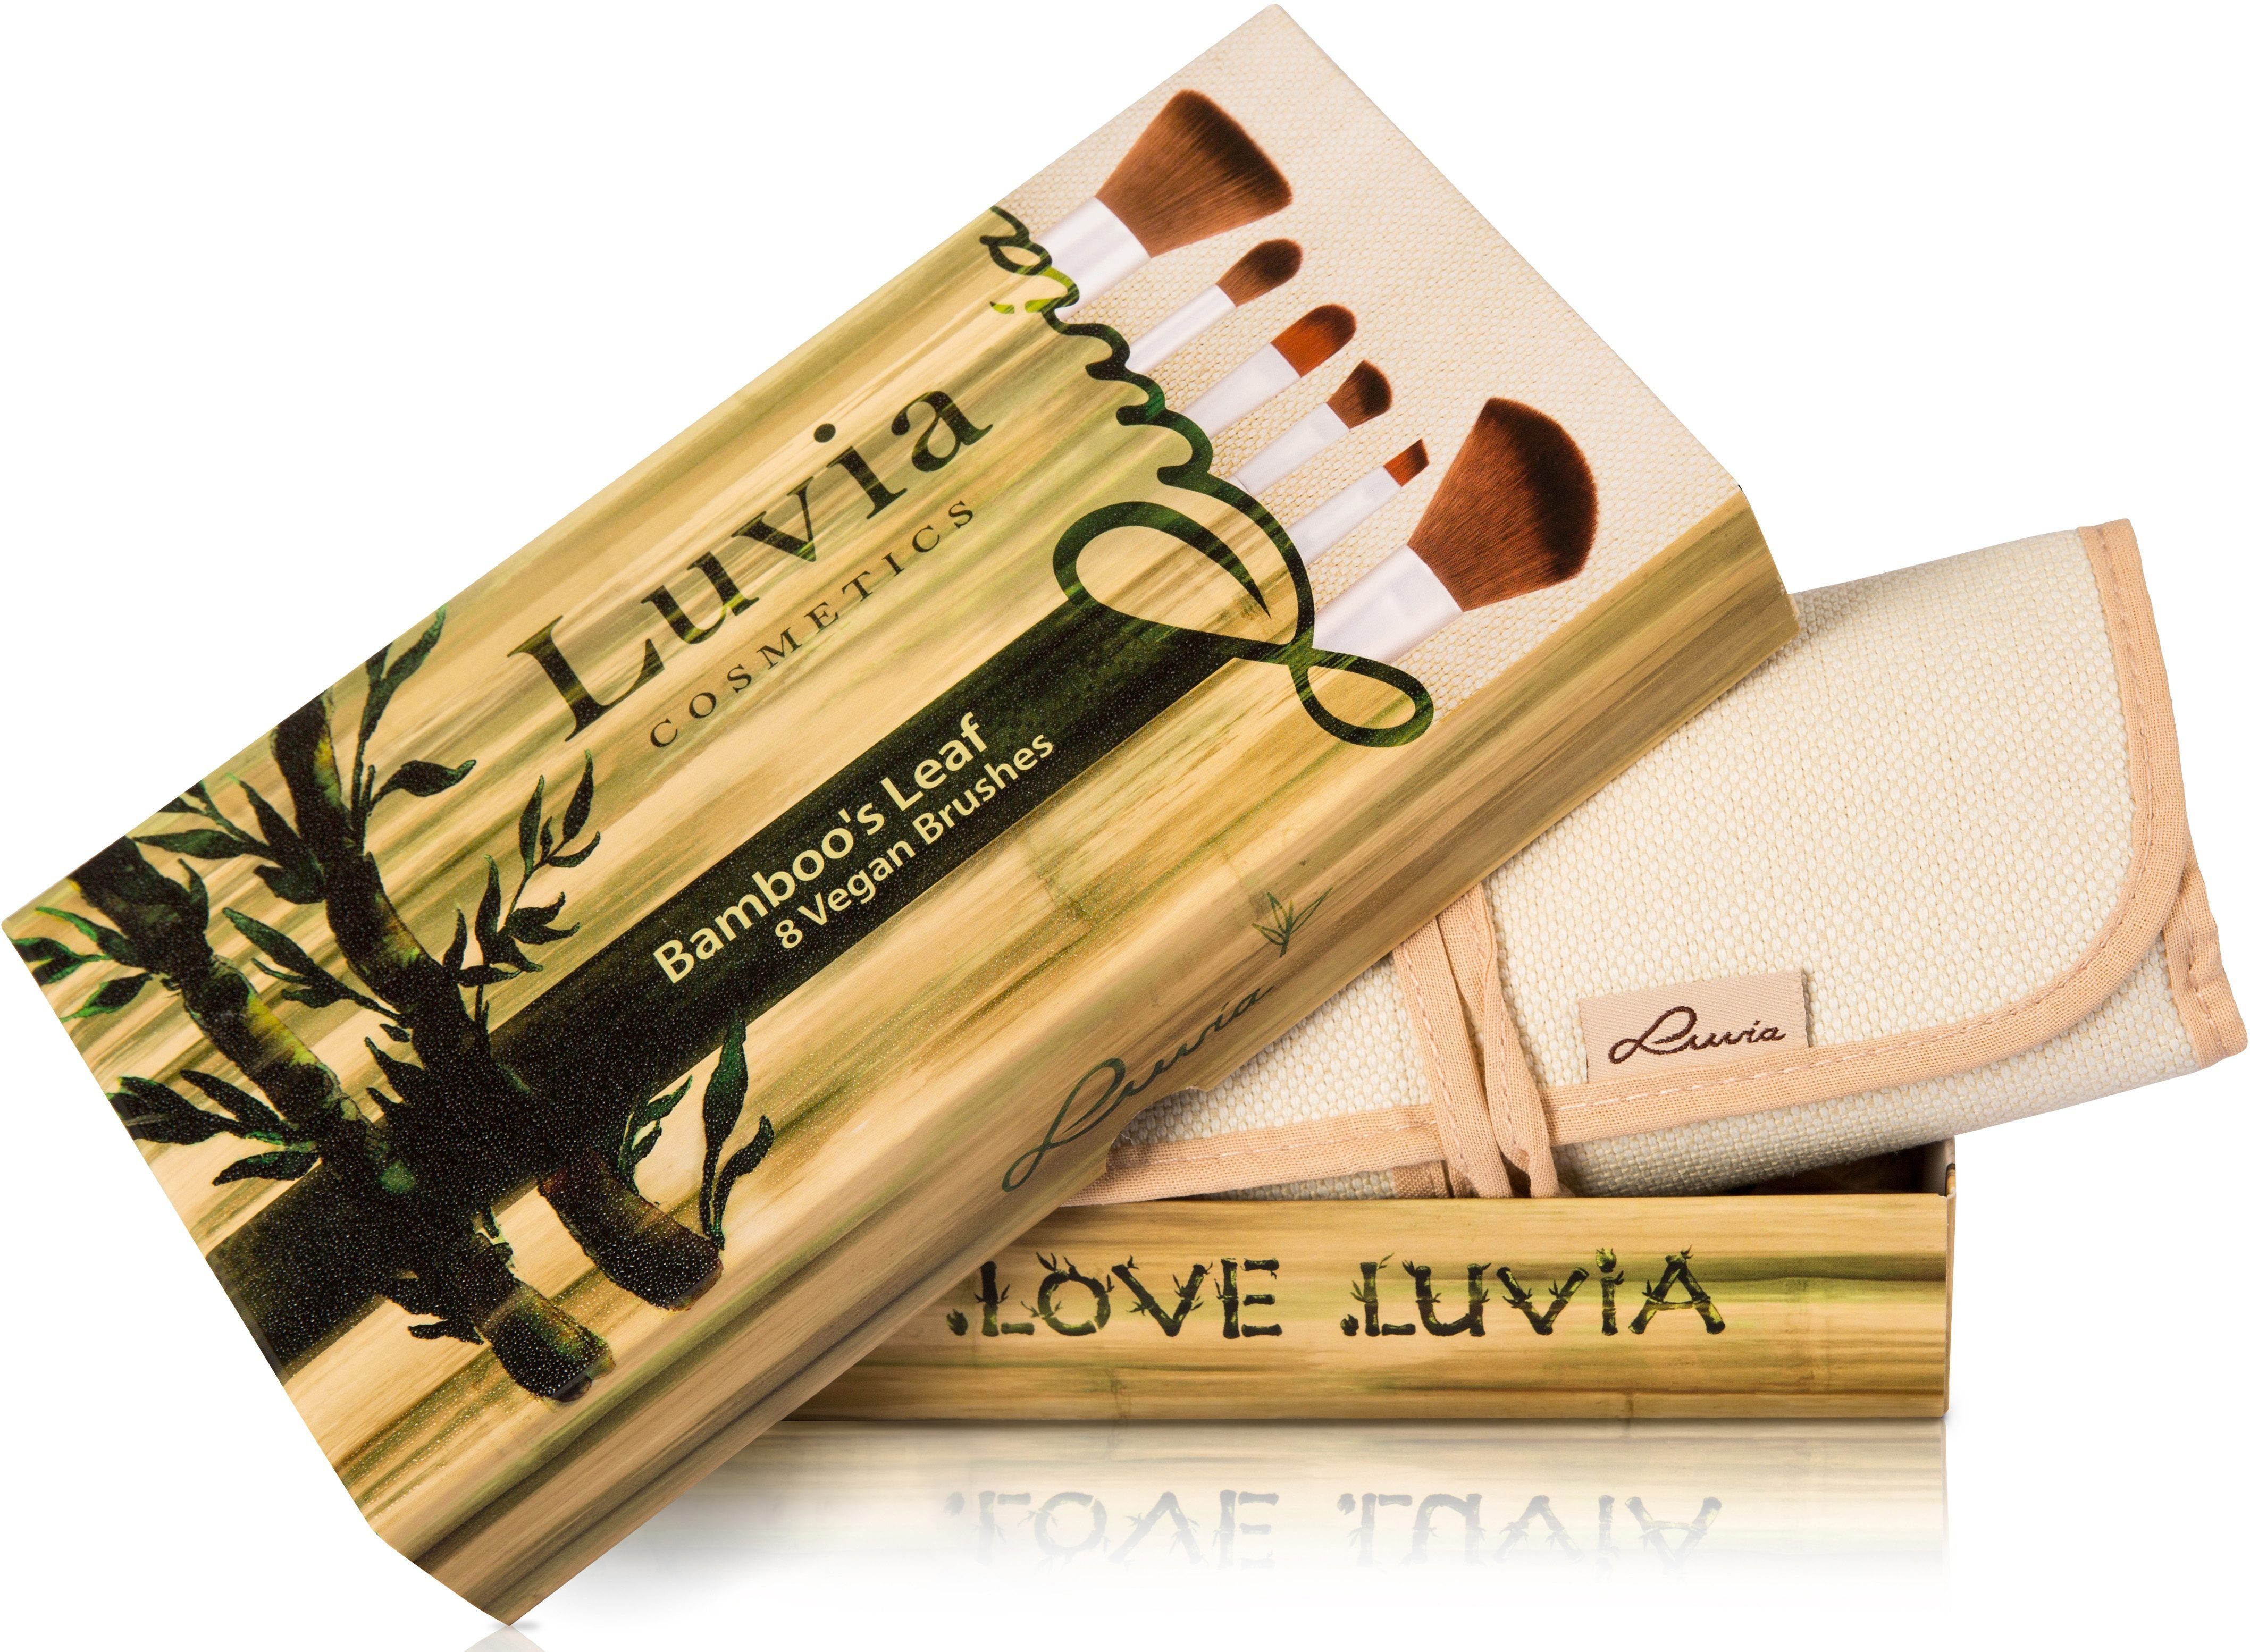 Luvia Cosmetics Kosmetikpinsel-Set Bamboo's Leaf, 8 tlg., vegan